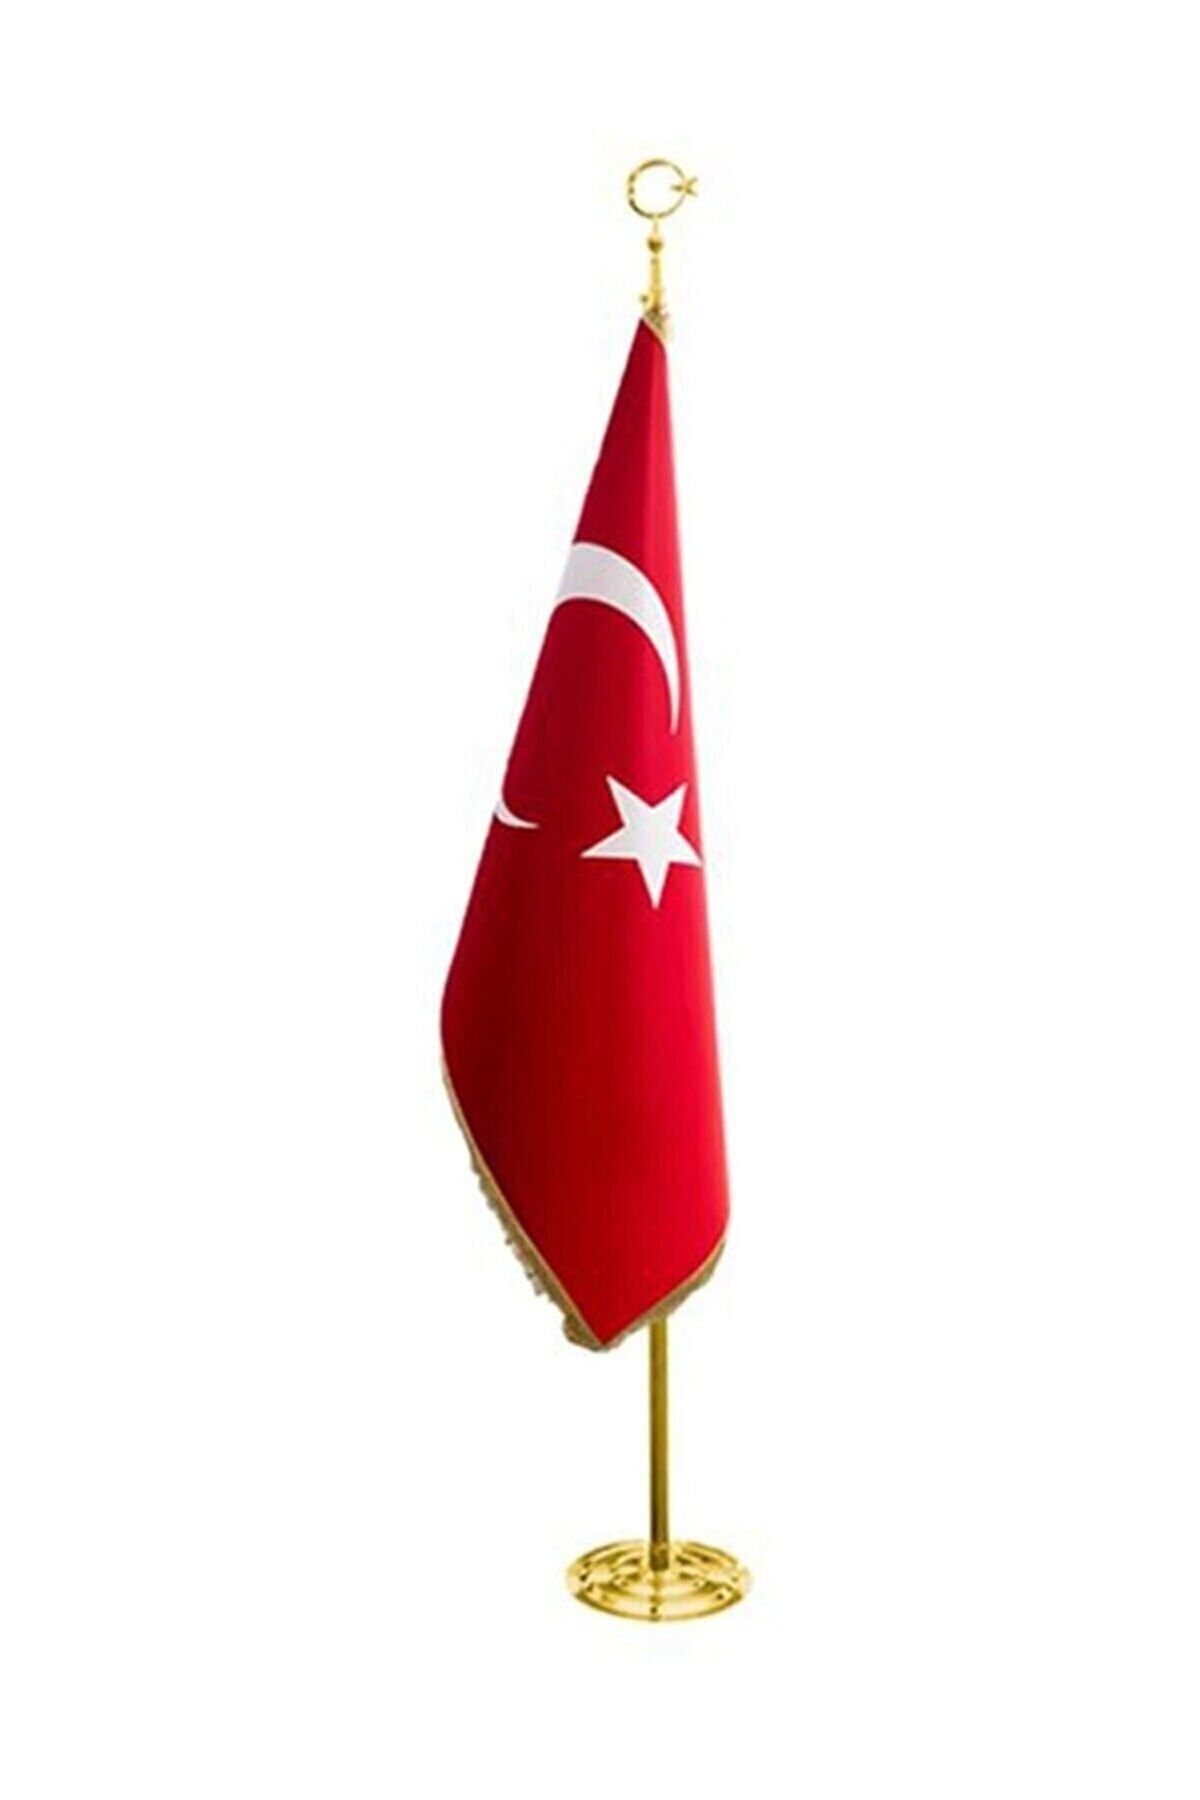 ASCANN Makam Bayrağı, Türk Bayrağı, Sarı Simli, Sarı Direkli 100x150